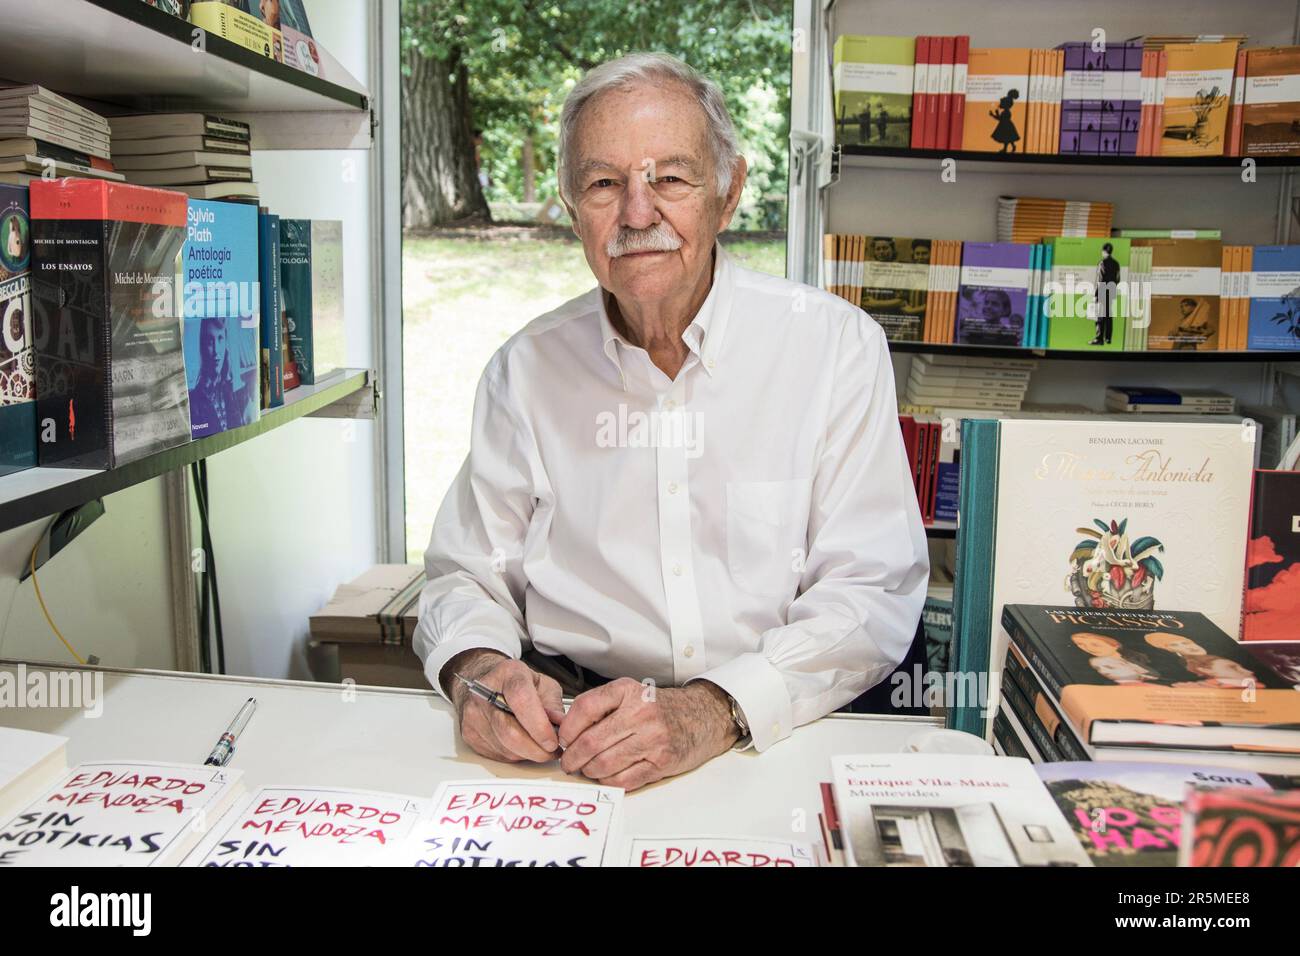 The Writer Eduardo Mendoza At The Madrid Book Fair 82 Edition In The Park Of El Retiro Madrid Spain Credit: agefotostock /Alamy Live News Stock Photo